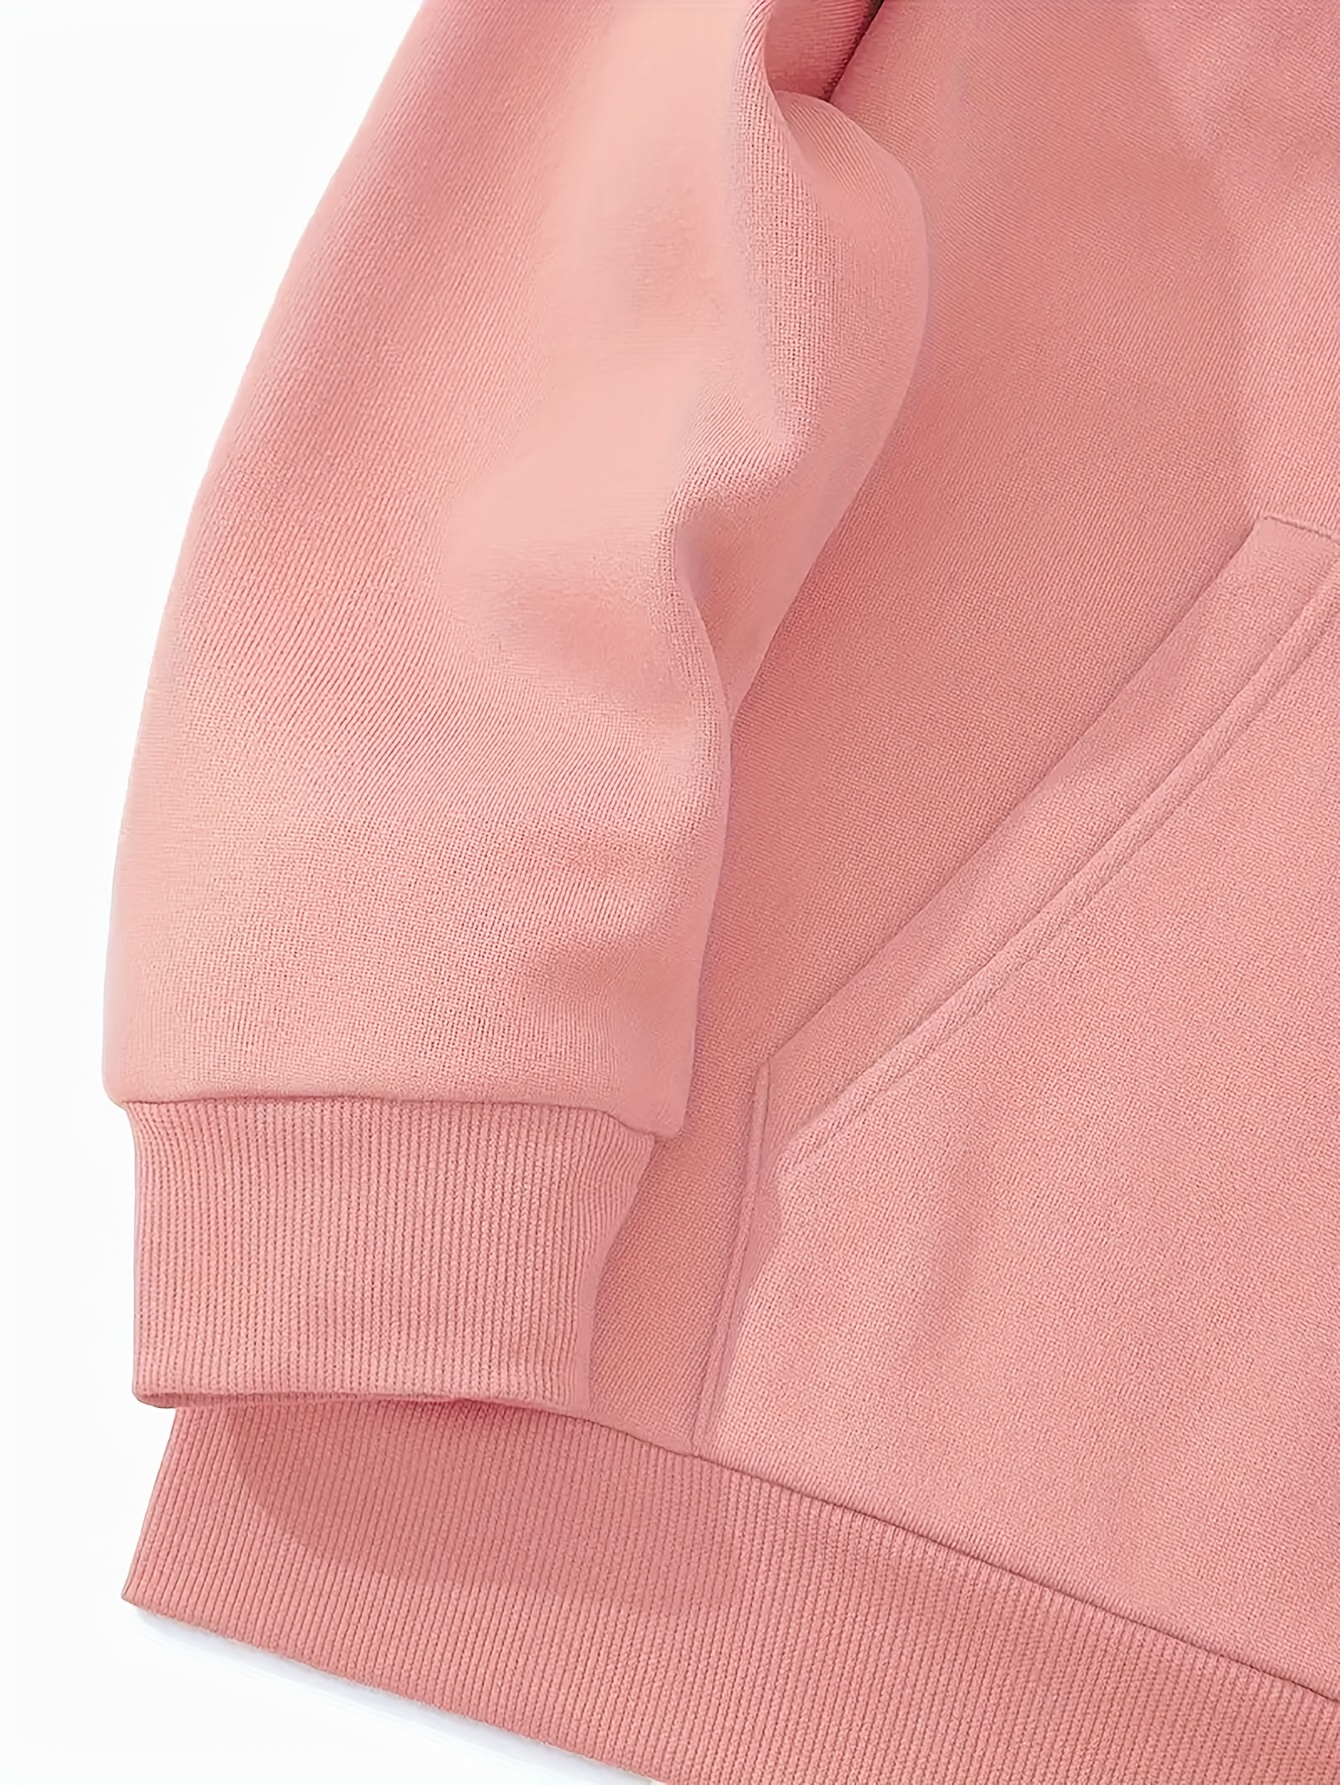 Relaxed Fit Sweatshirt - Light pink - Men